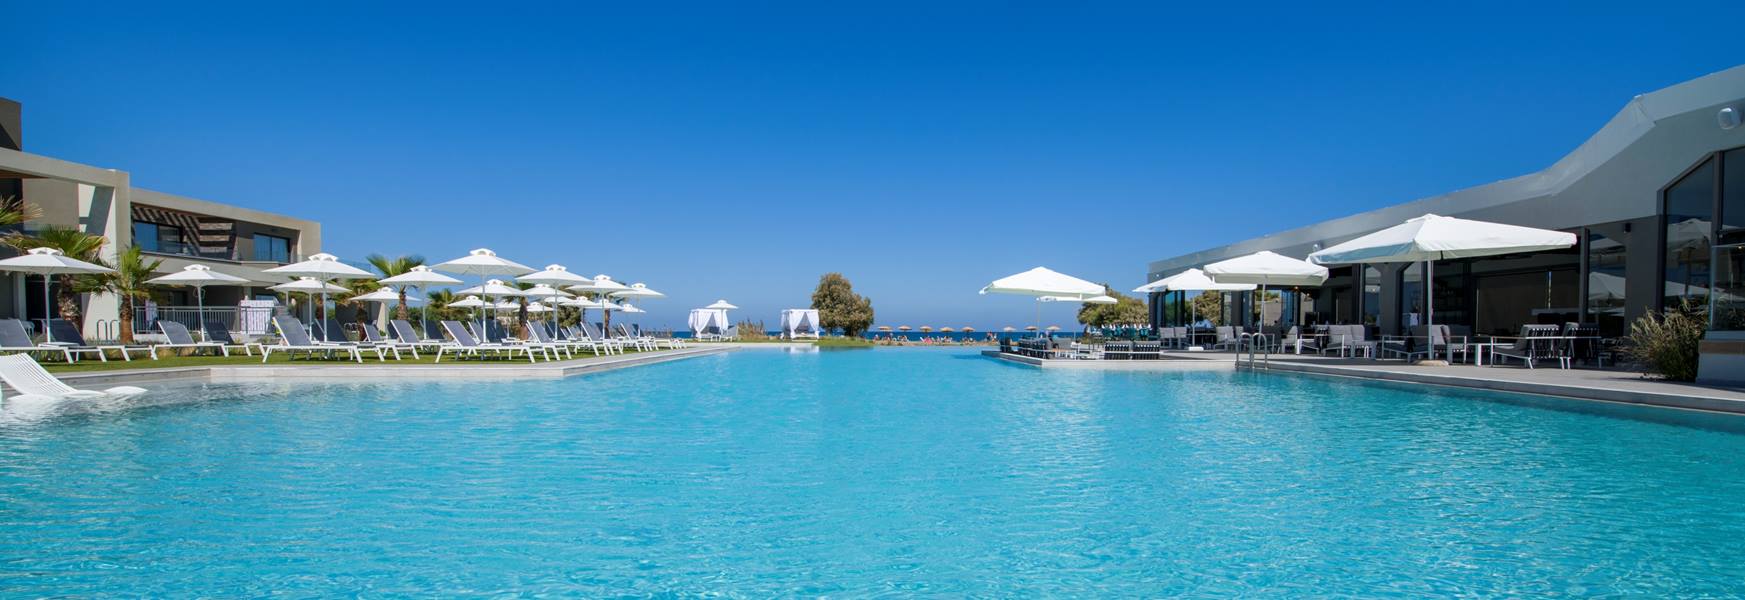 Hotel Myrion Beach Resort & Spa